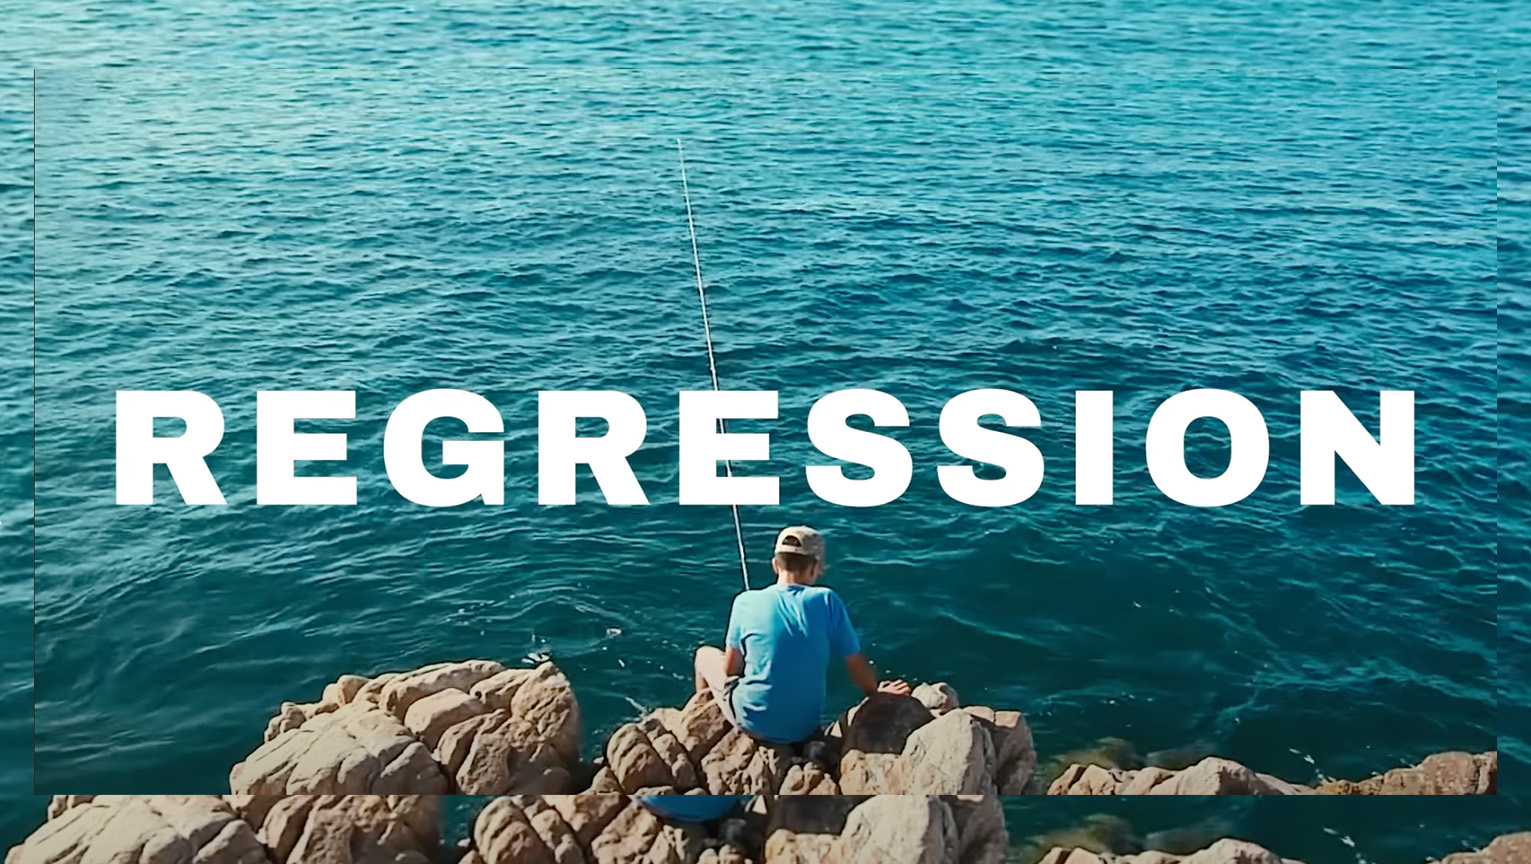 VIDEO: REGRESSION